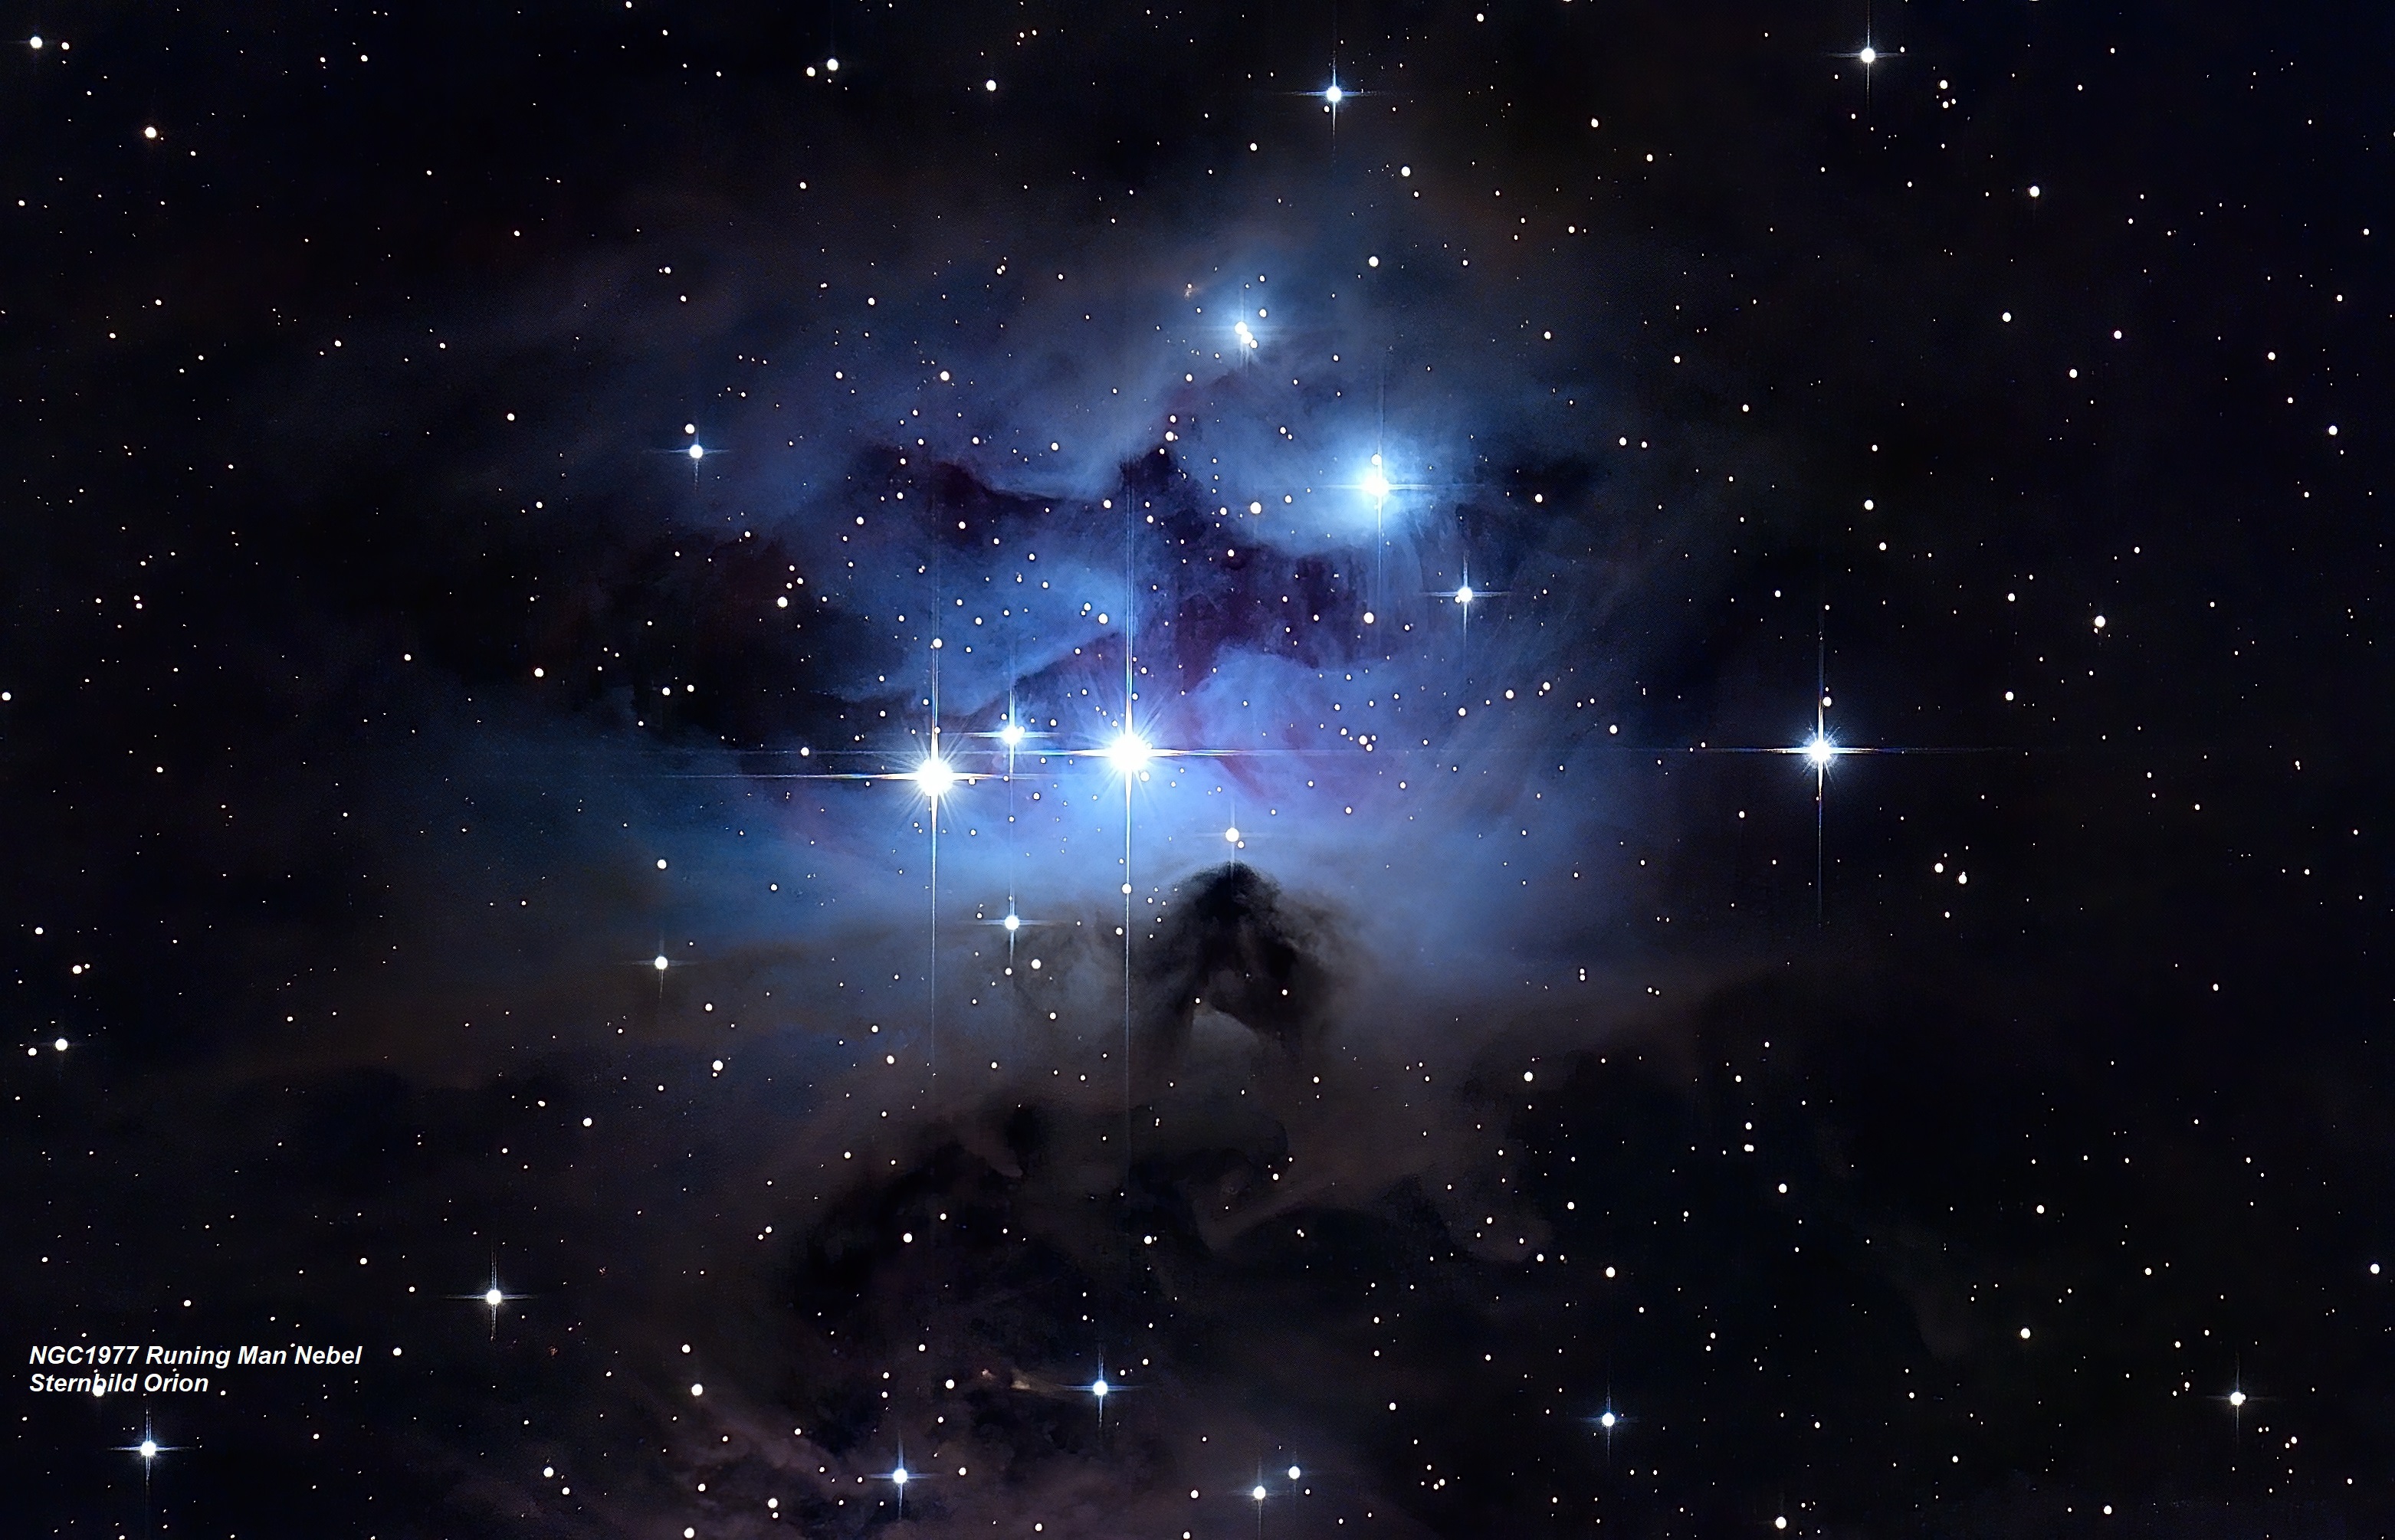 NGC1977 Runing Man Nebel